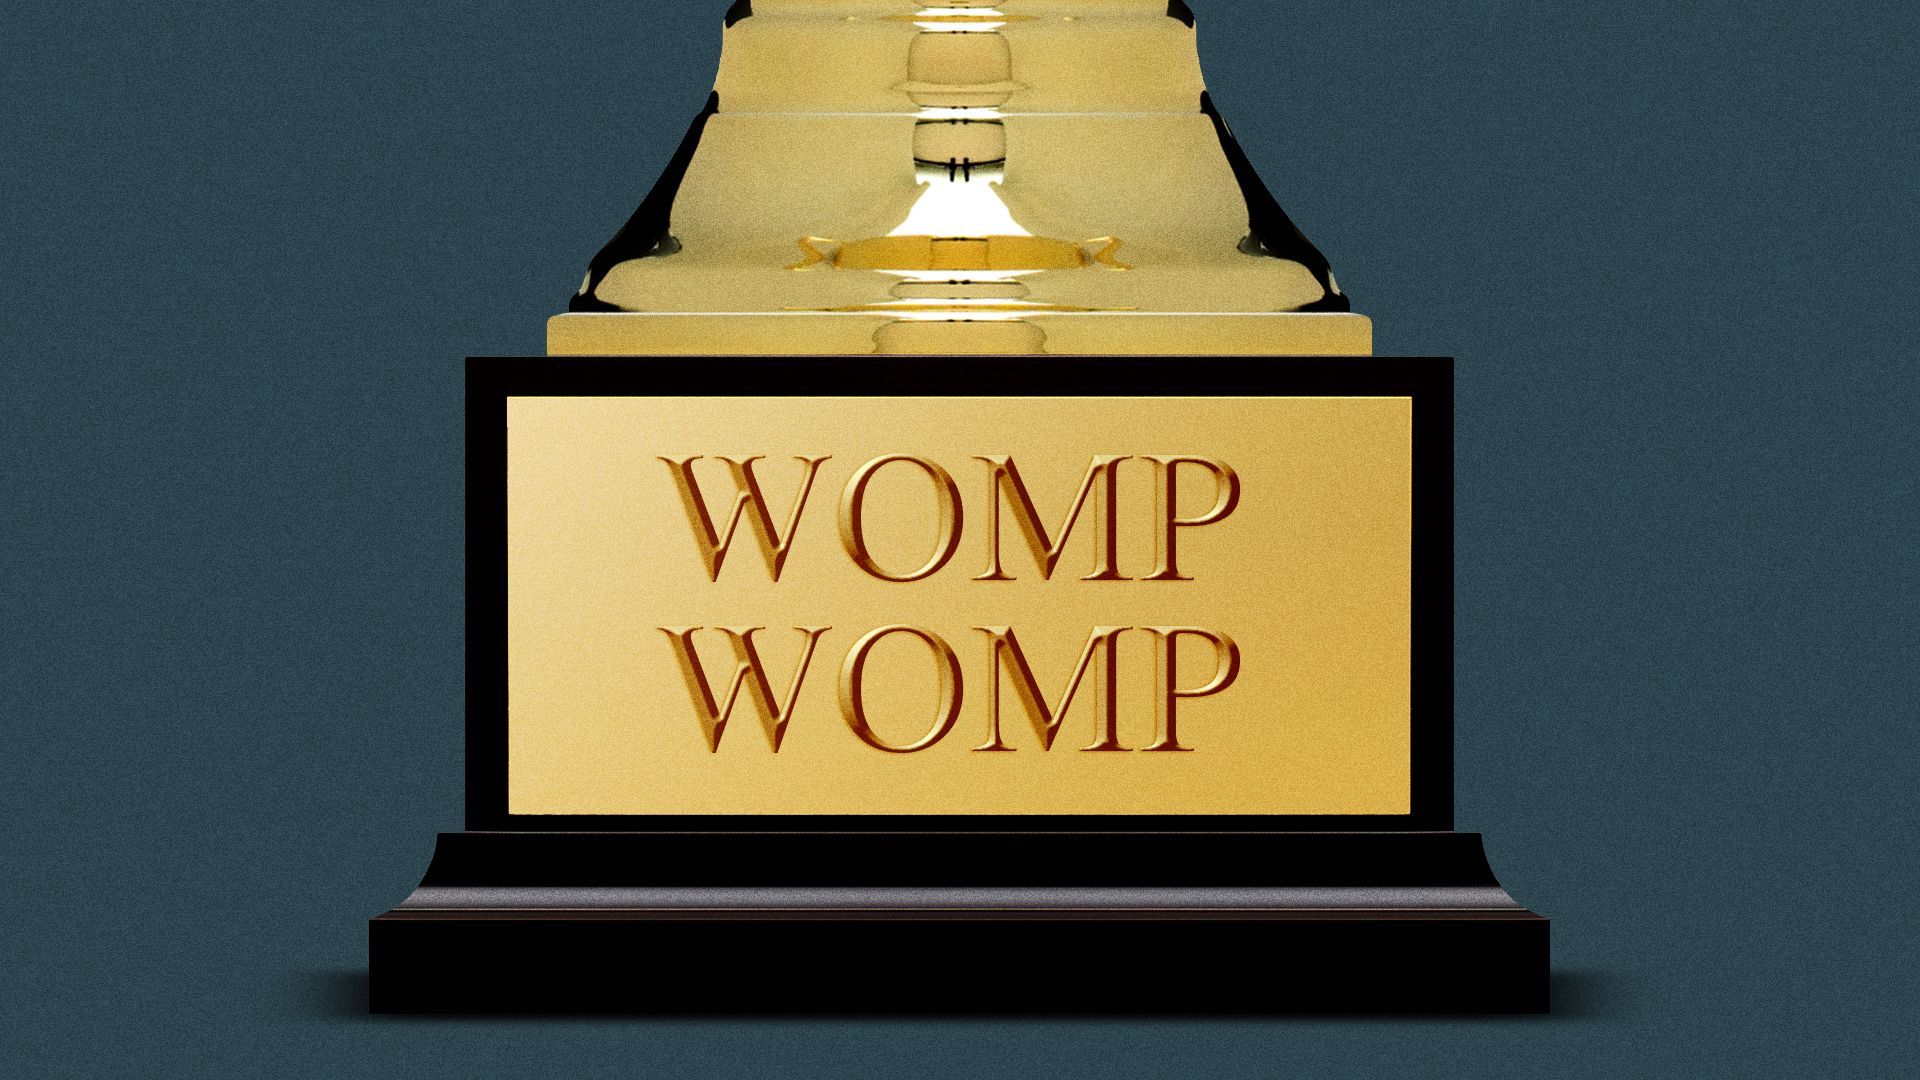 Illustration of a trophy that says "Womp womp." 